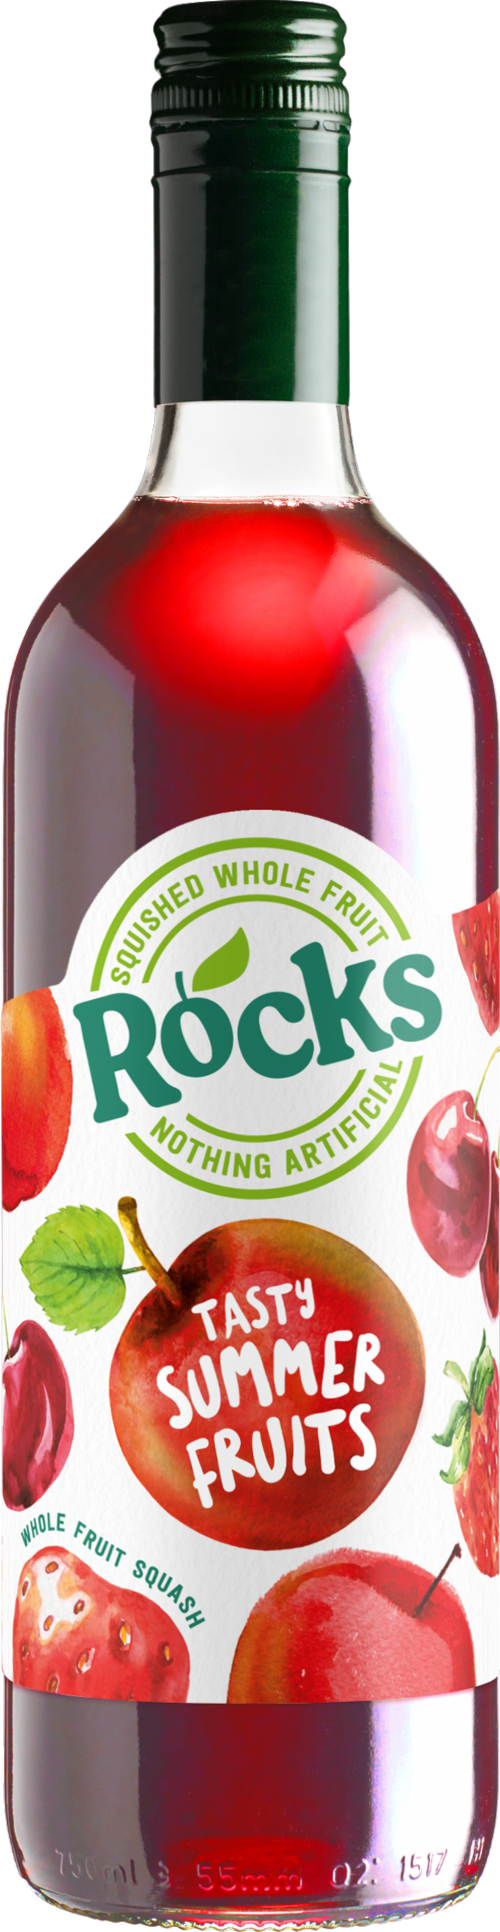 ROCKS Fruit Squash - Tasty Summer Fruits 740ml